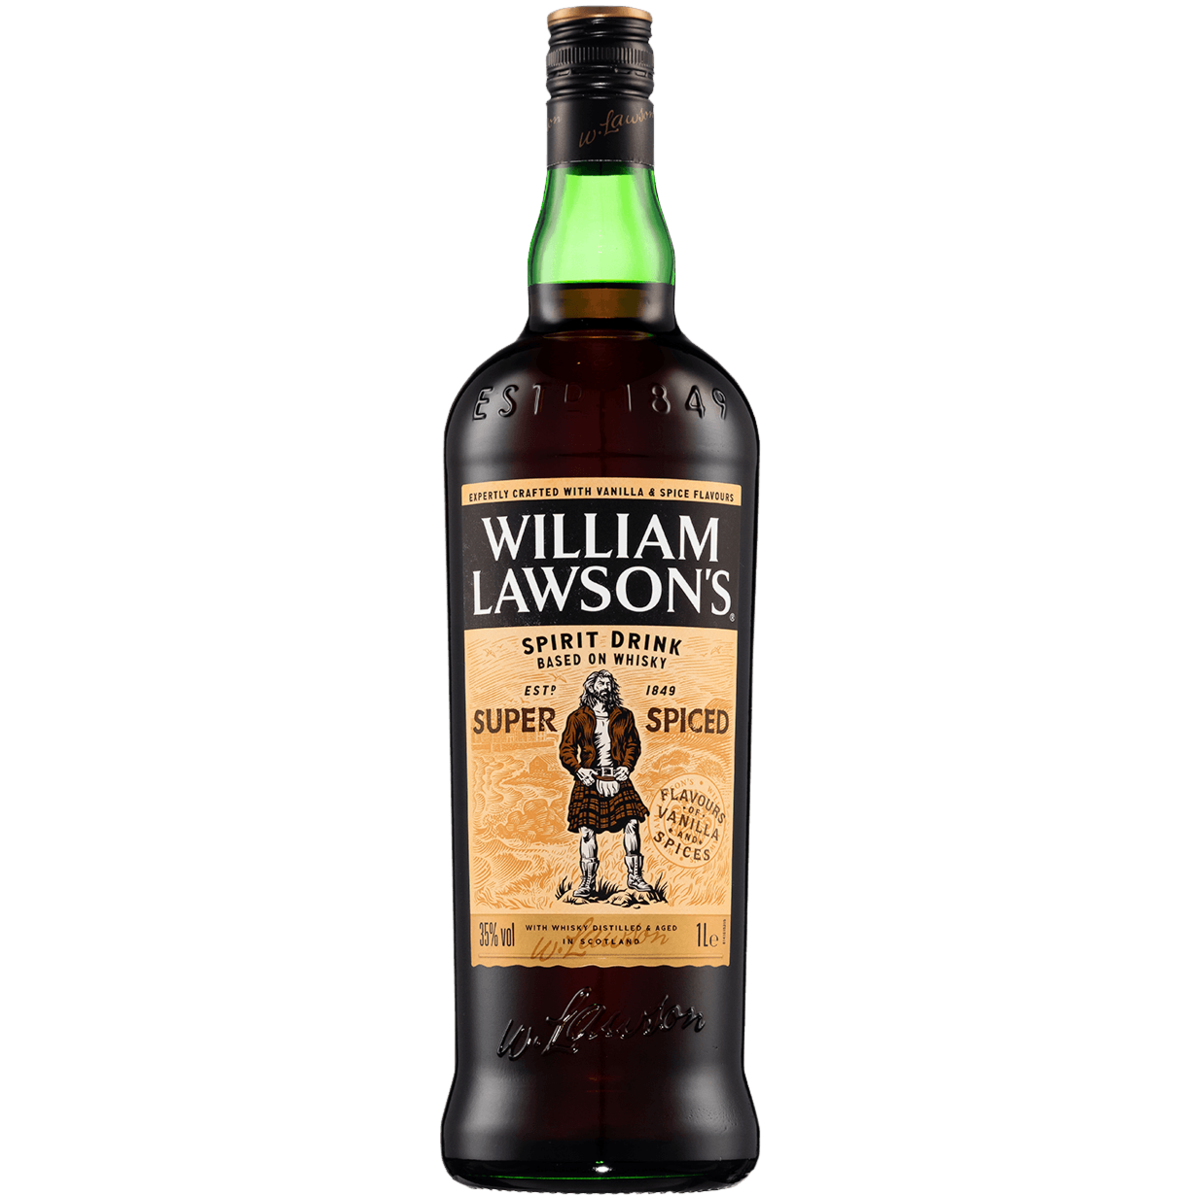 Super spiced. Виски Вильям Лоусонс пряный. William Lawson's 0.7 super Spiced виски. Напиток Вильям Лоусонс супер Спайсд. Вильям Доусен супер Списед.